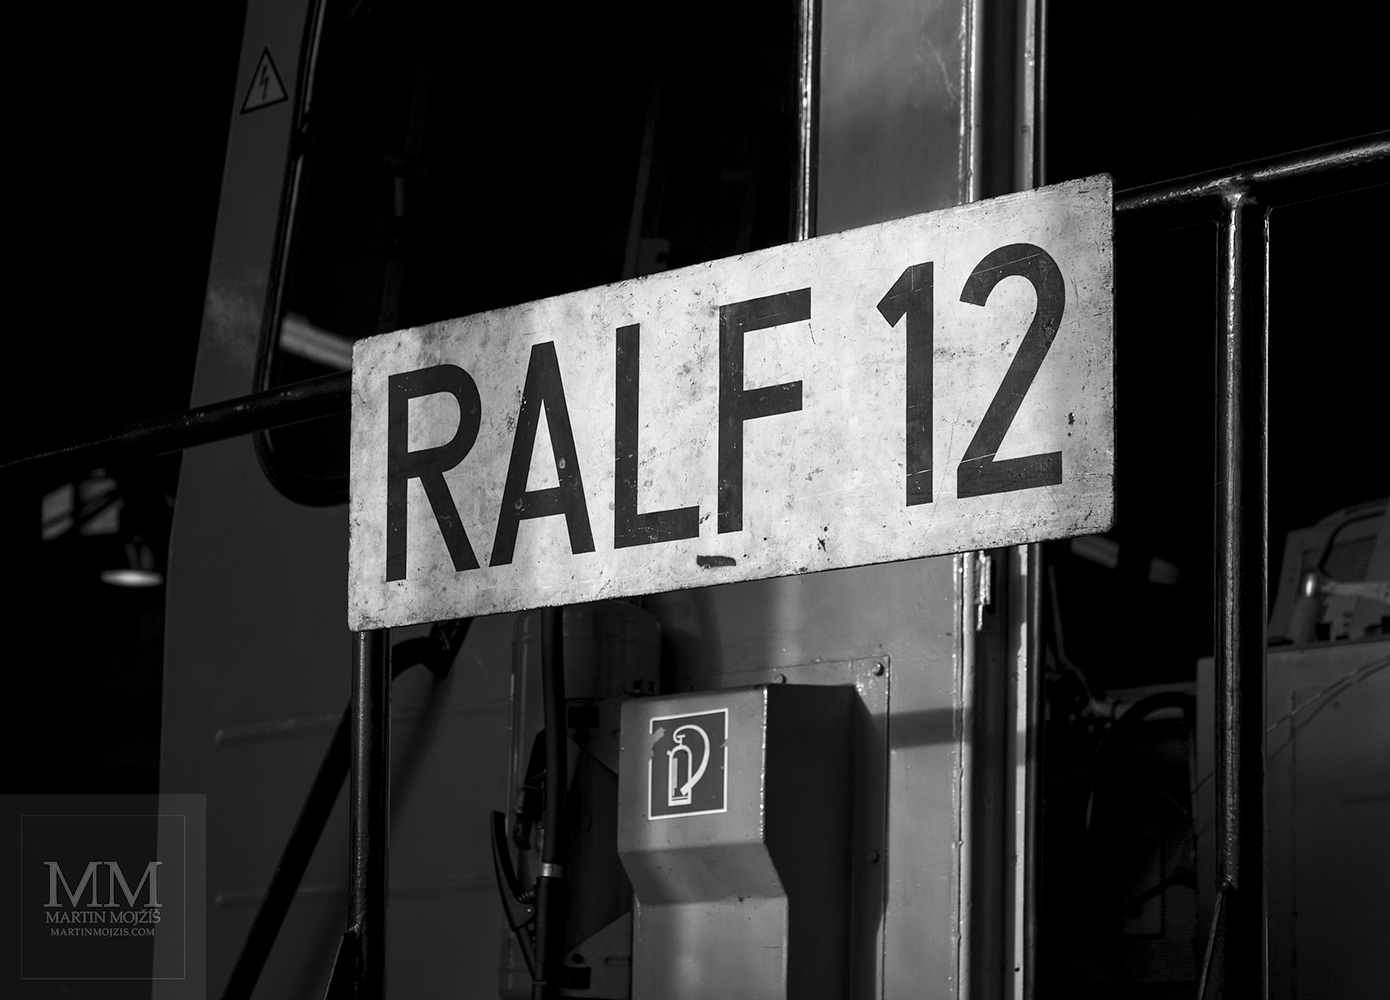 Nápis RALF 12 na lokomotivě. Eisenbahnmuseum Dresden. Železniční muzeum v Drážďanech.